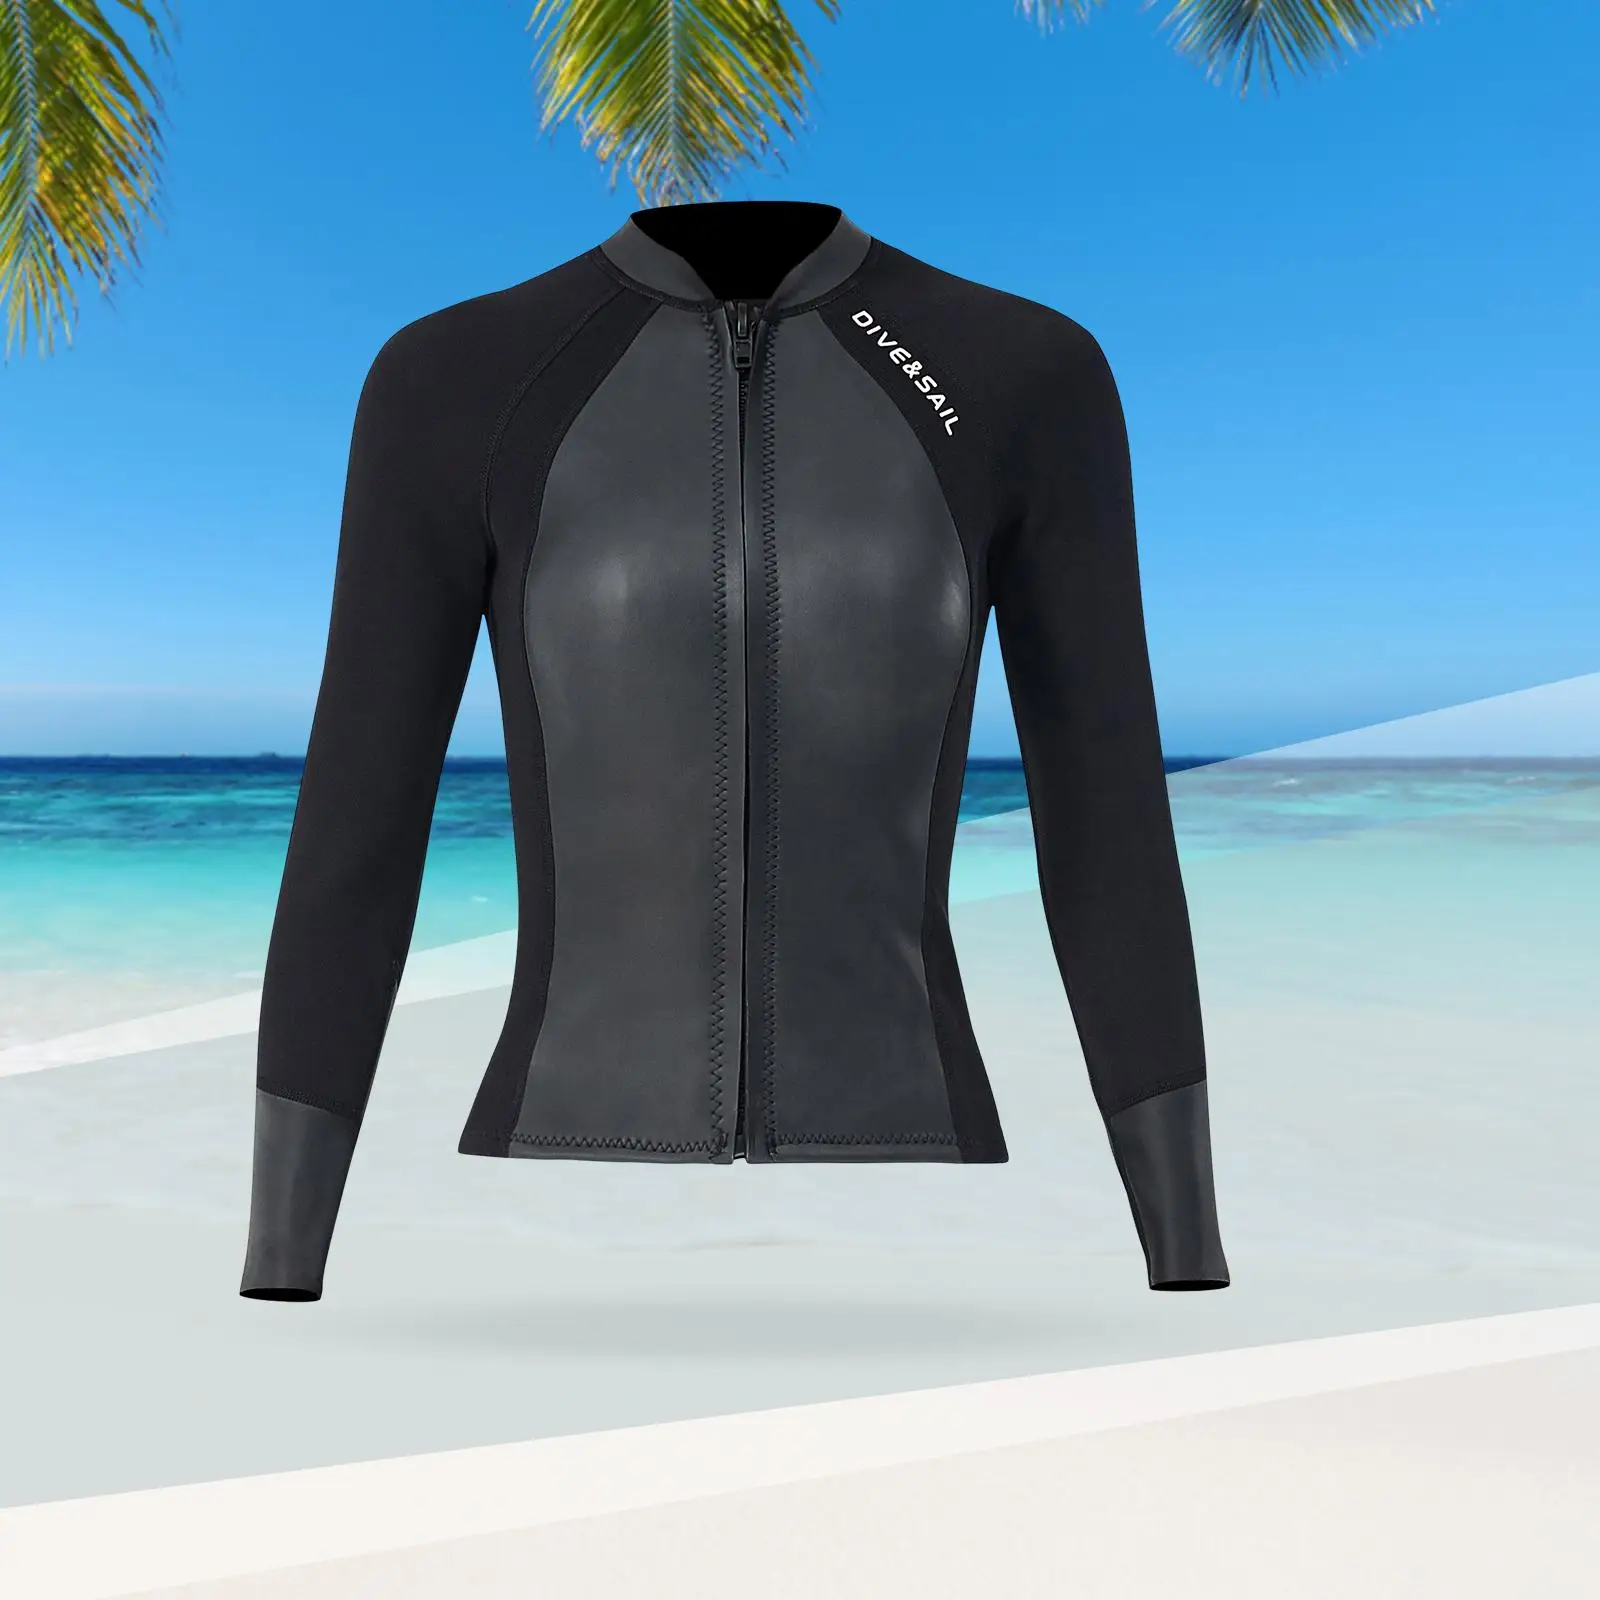 Neoprene Wetsuit Top Scuba Diving Suit Long Sleeve Wetsuits Jacket Front Zip Wet Suit for Kayaking Swimming Canoeing Surfing